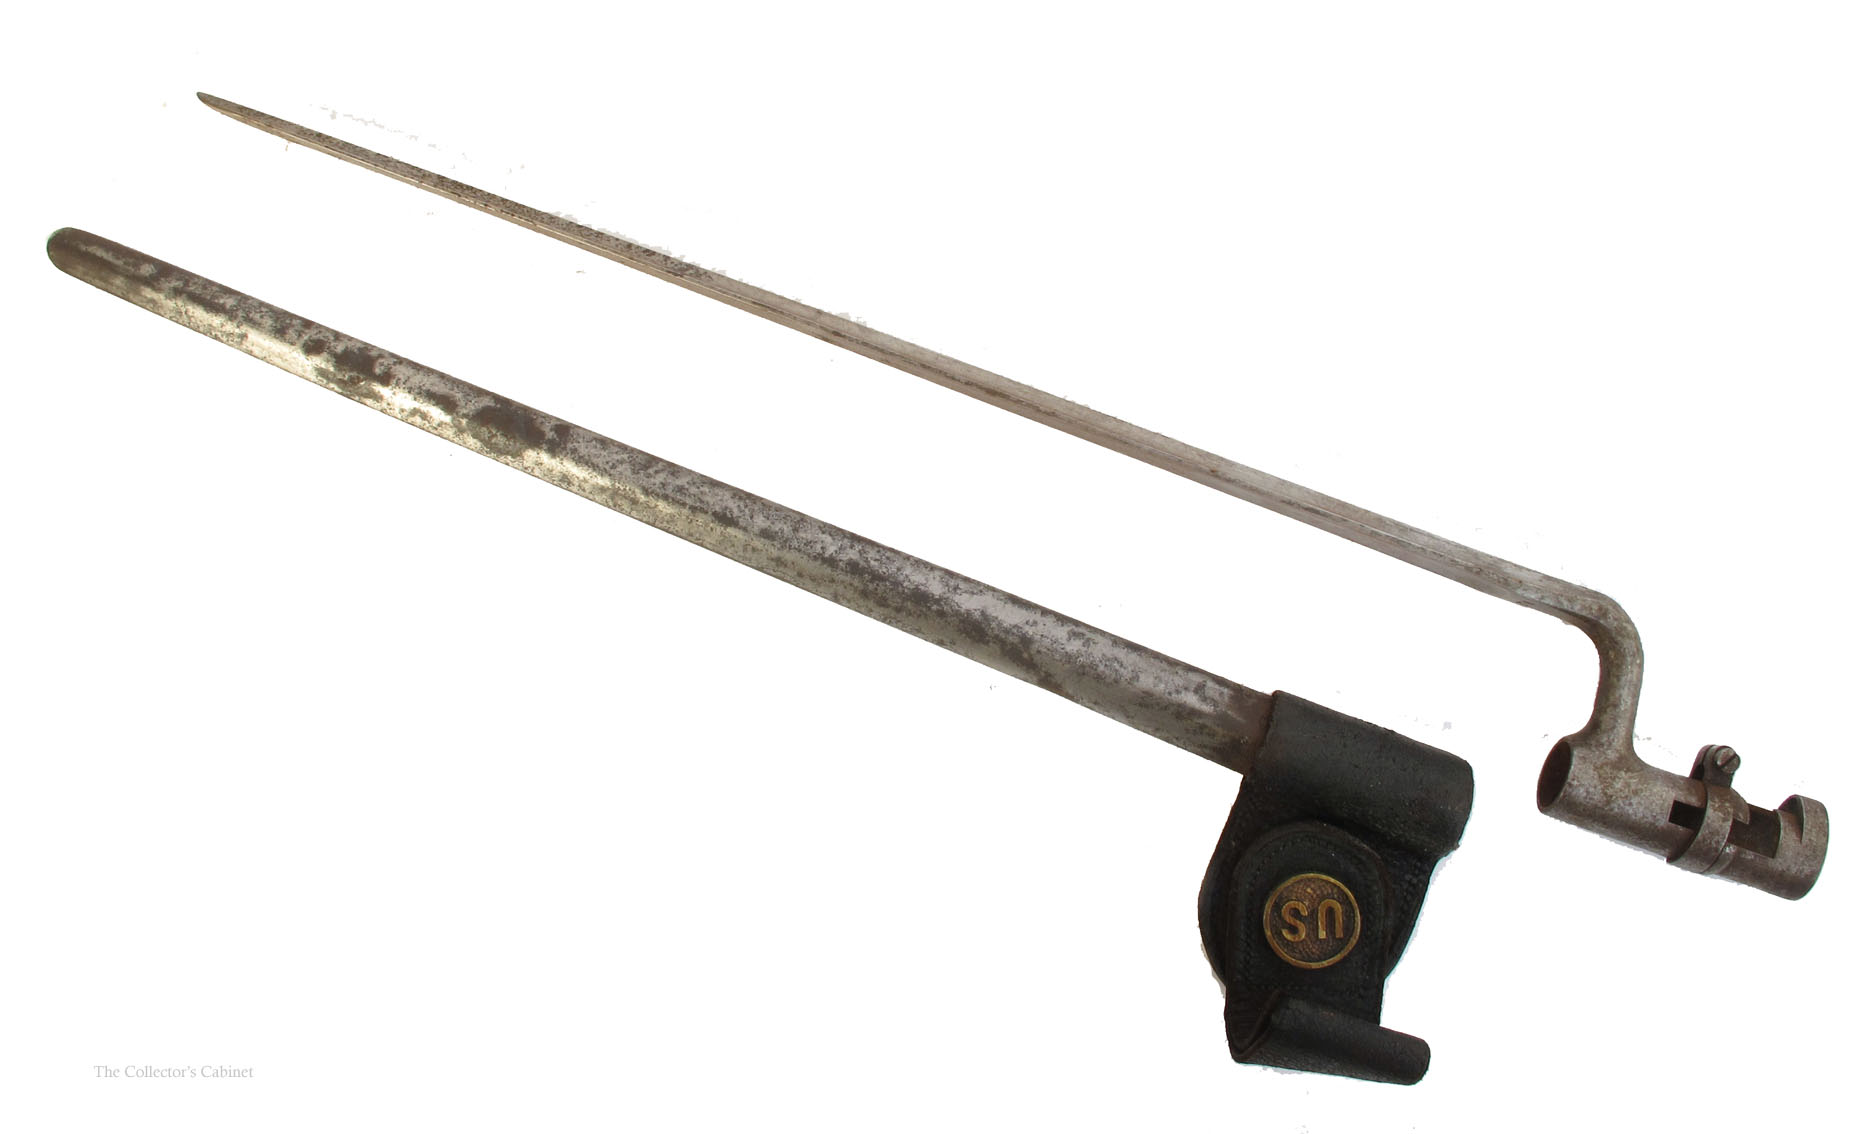 1861-1865 US Civil War, infantryman's bayonet, a socket bayonet used with the .